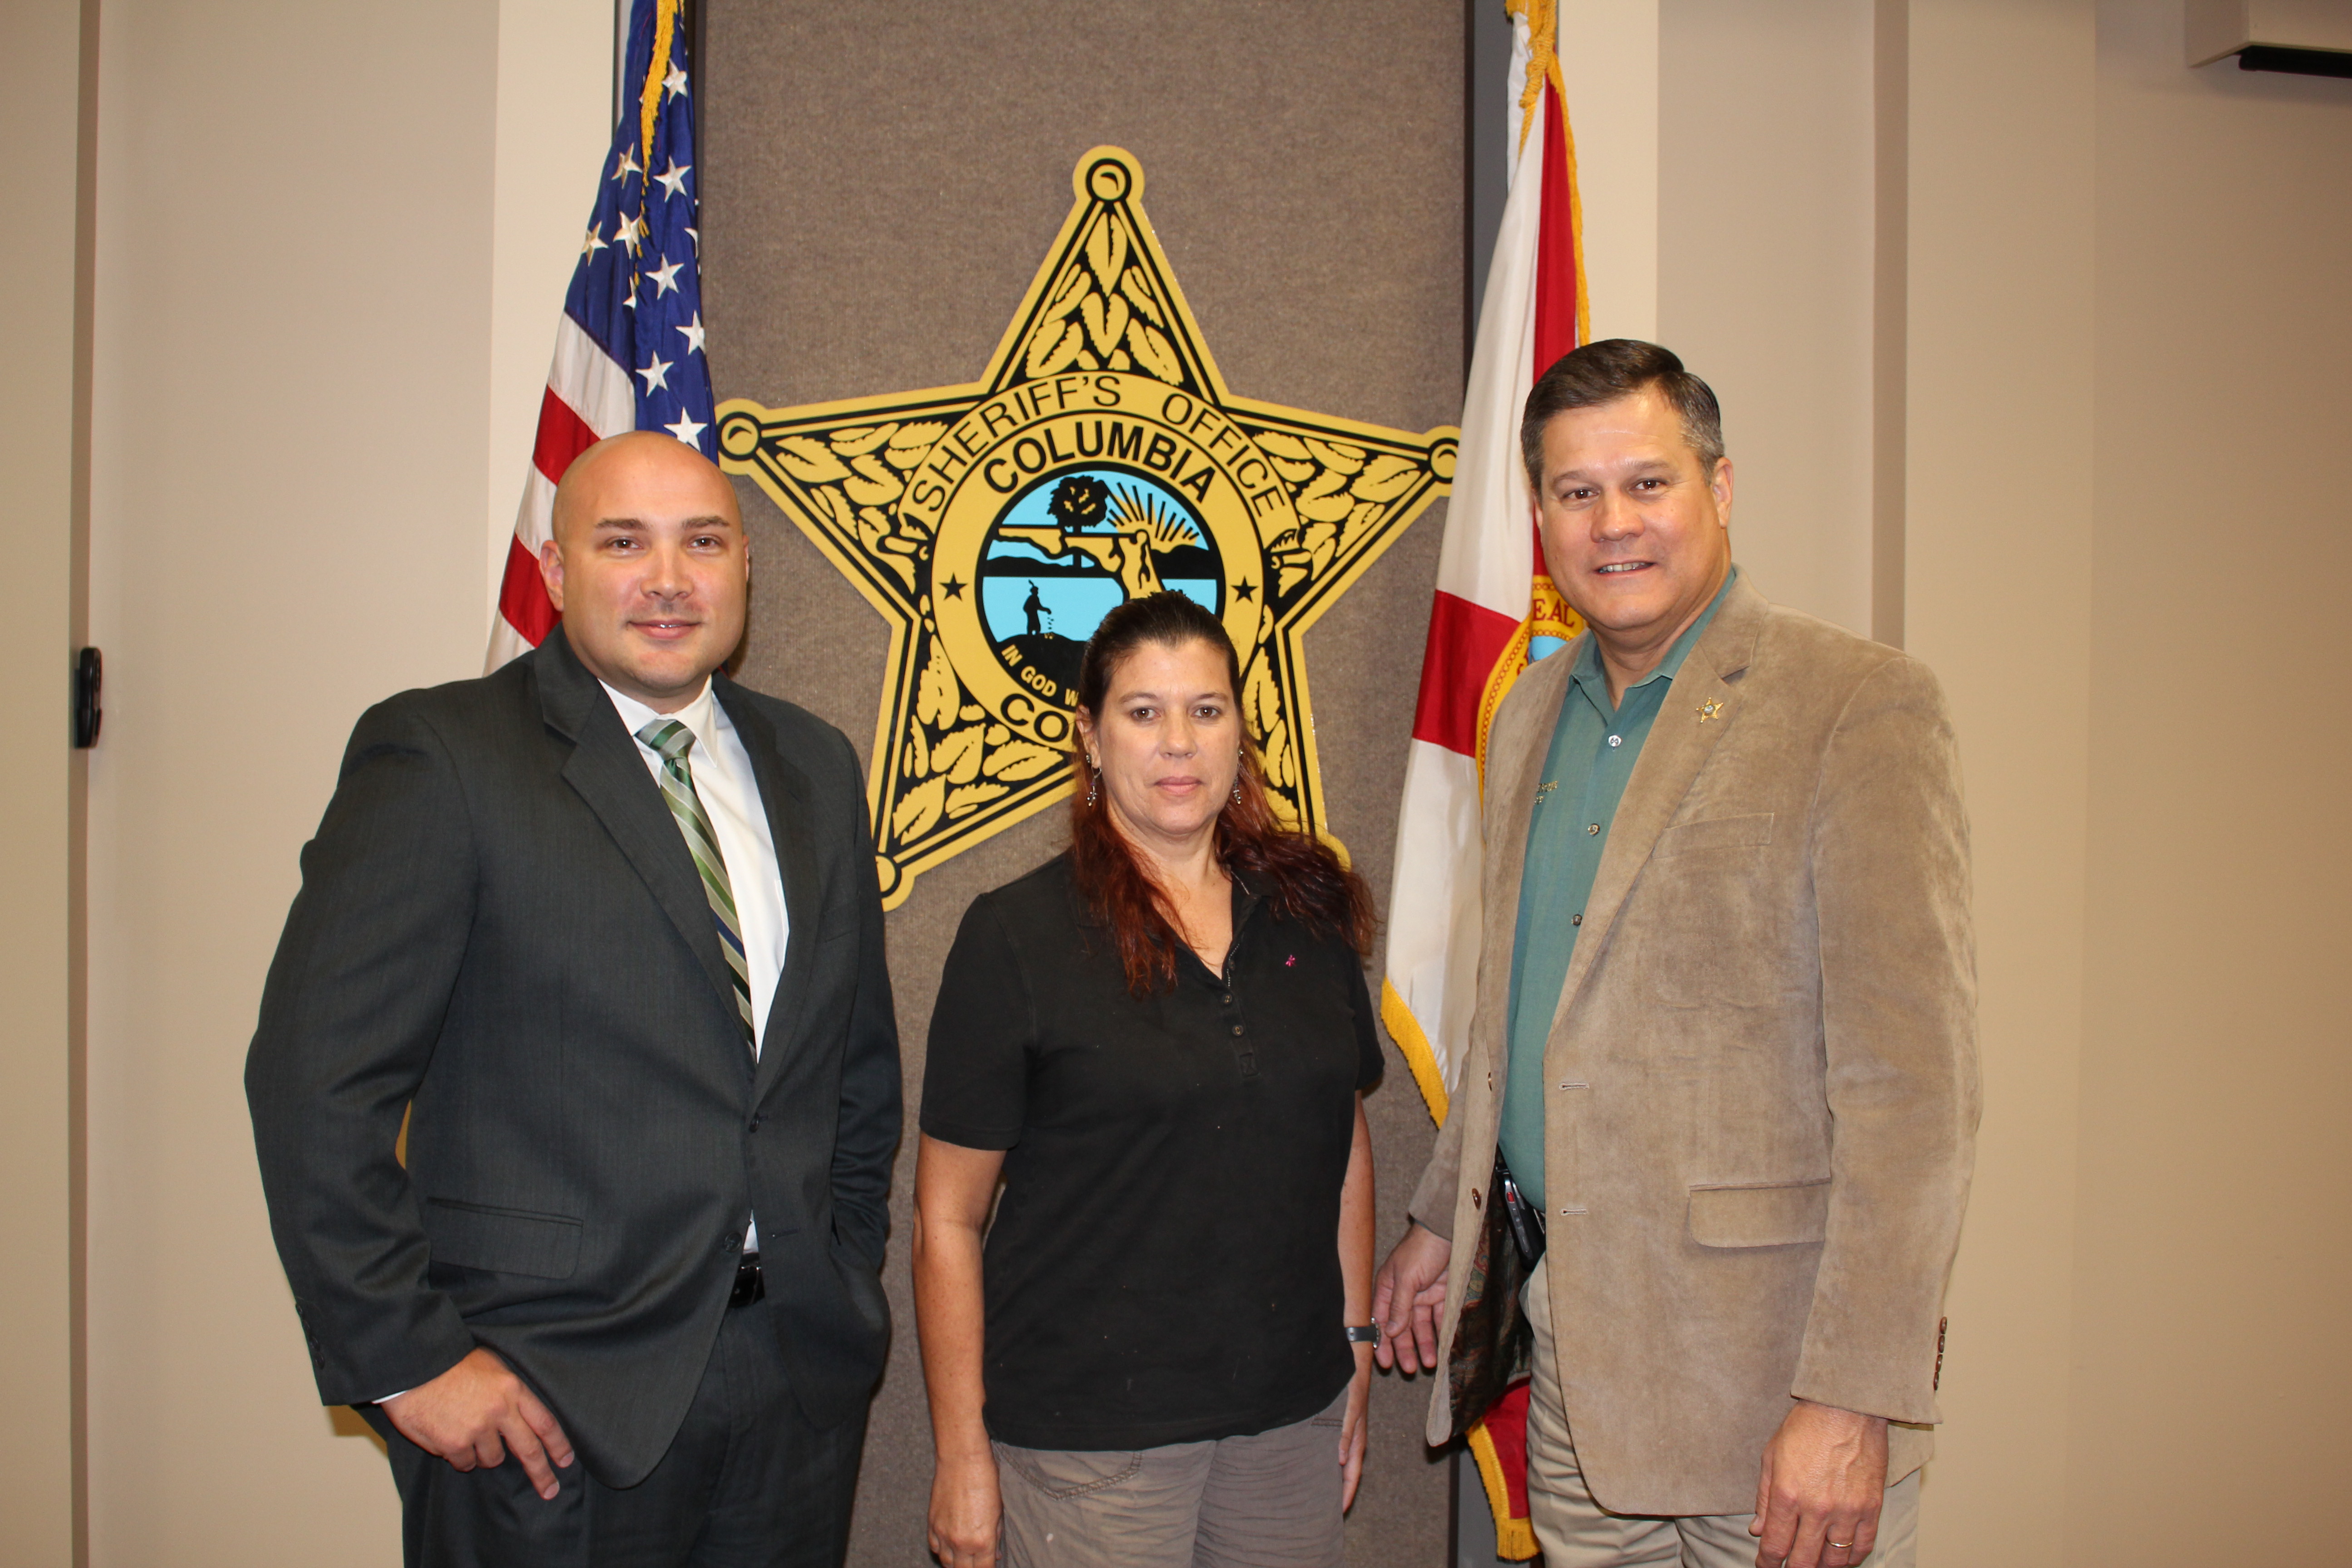 Deputy Kevin Cox, Ms. Martha Adams, and Sheriff Mark Hunter